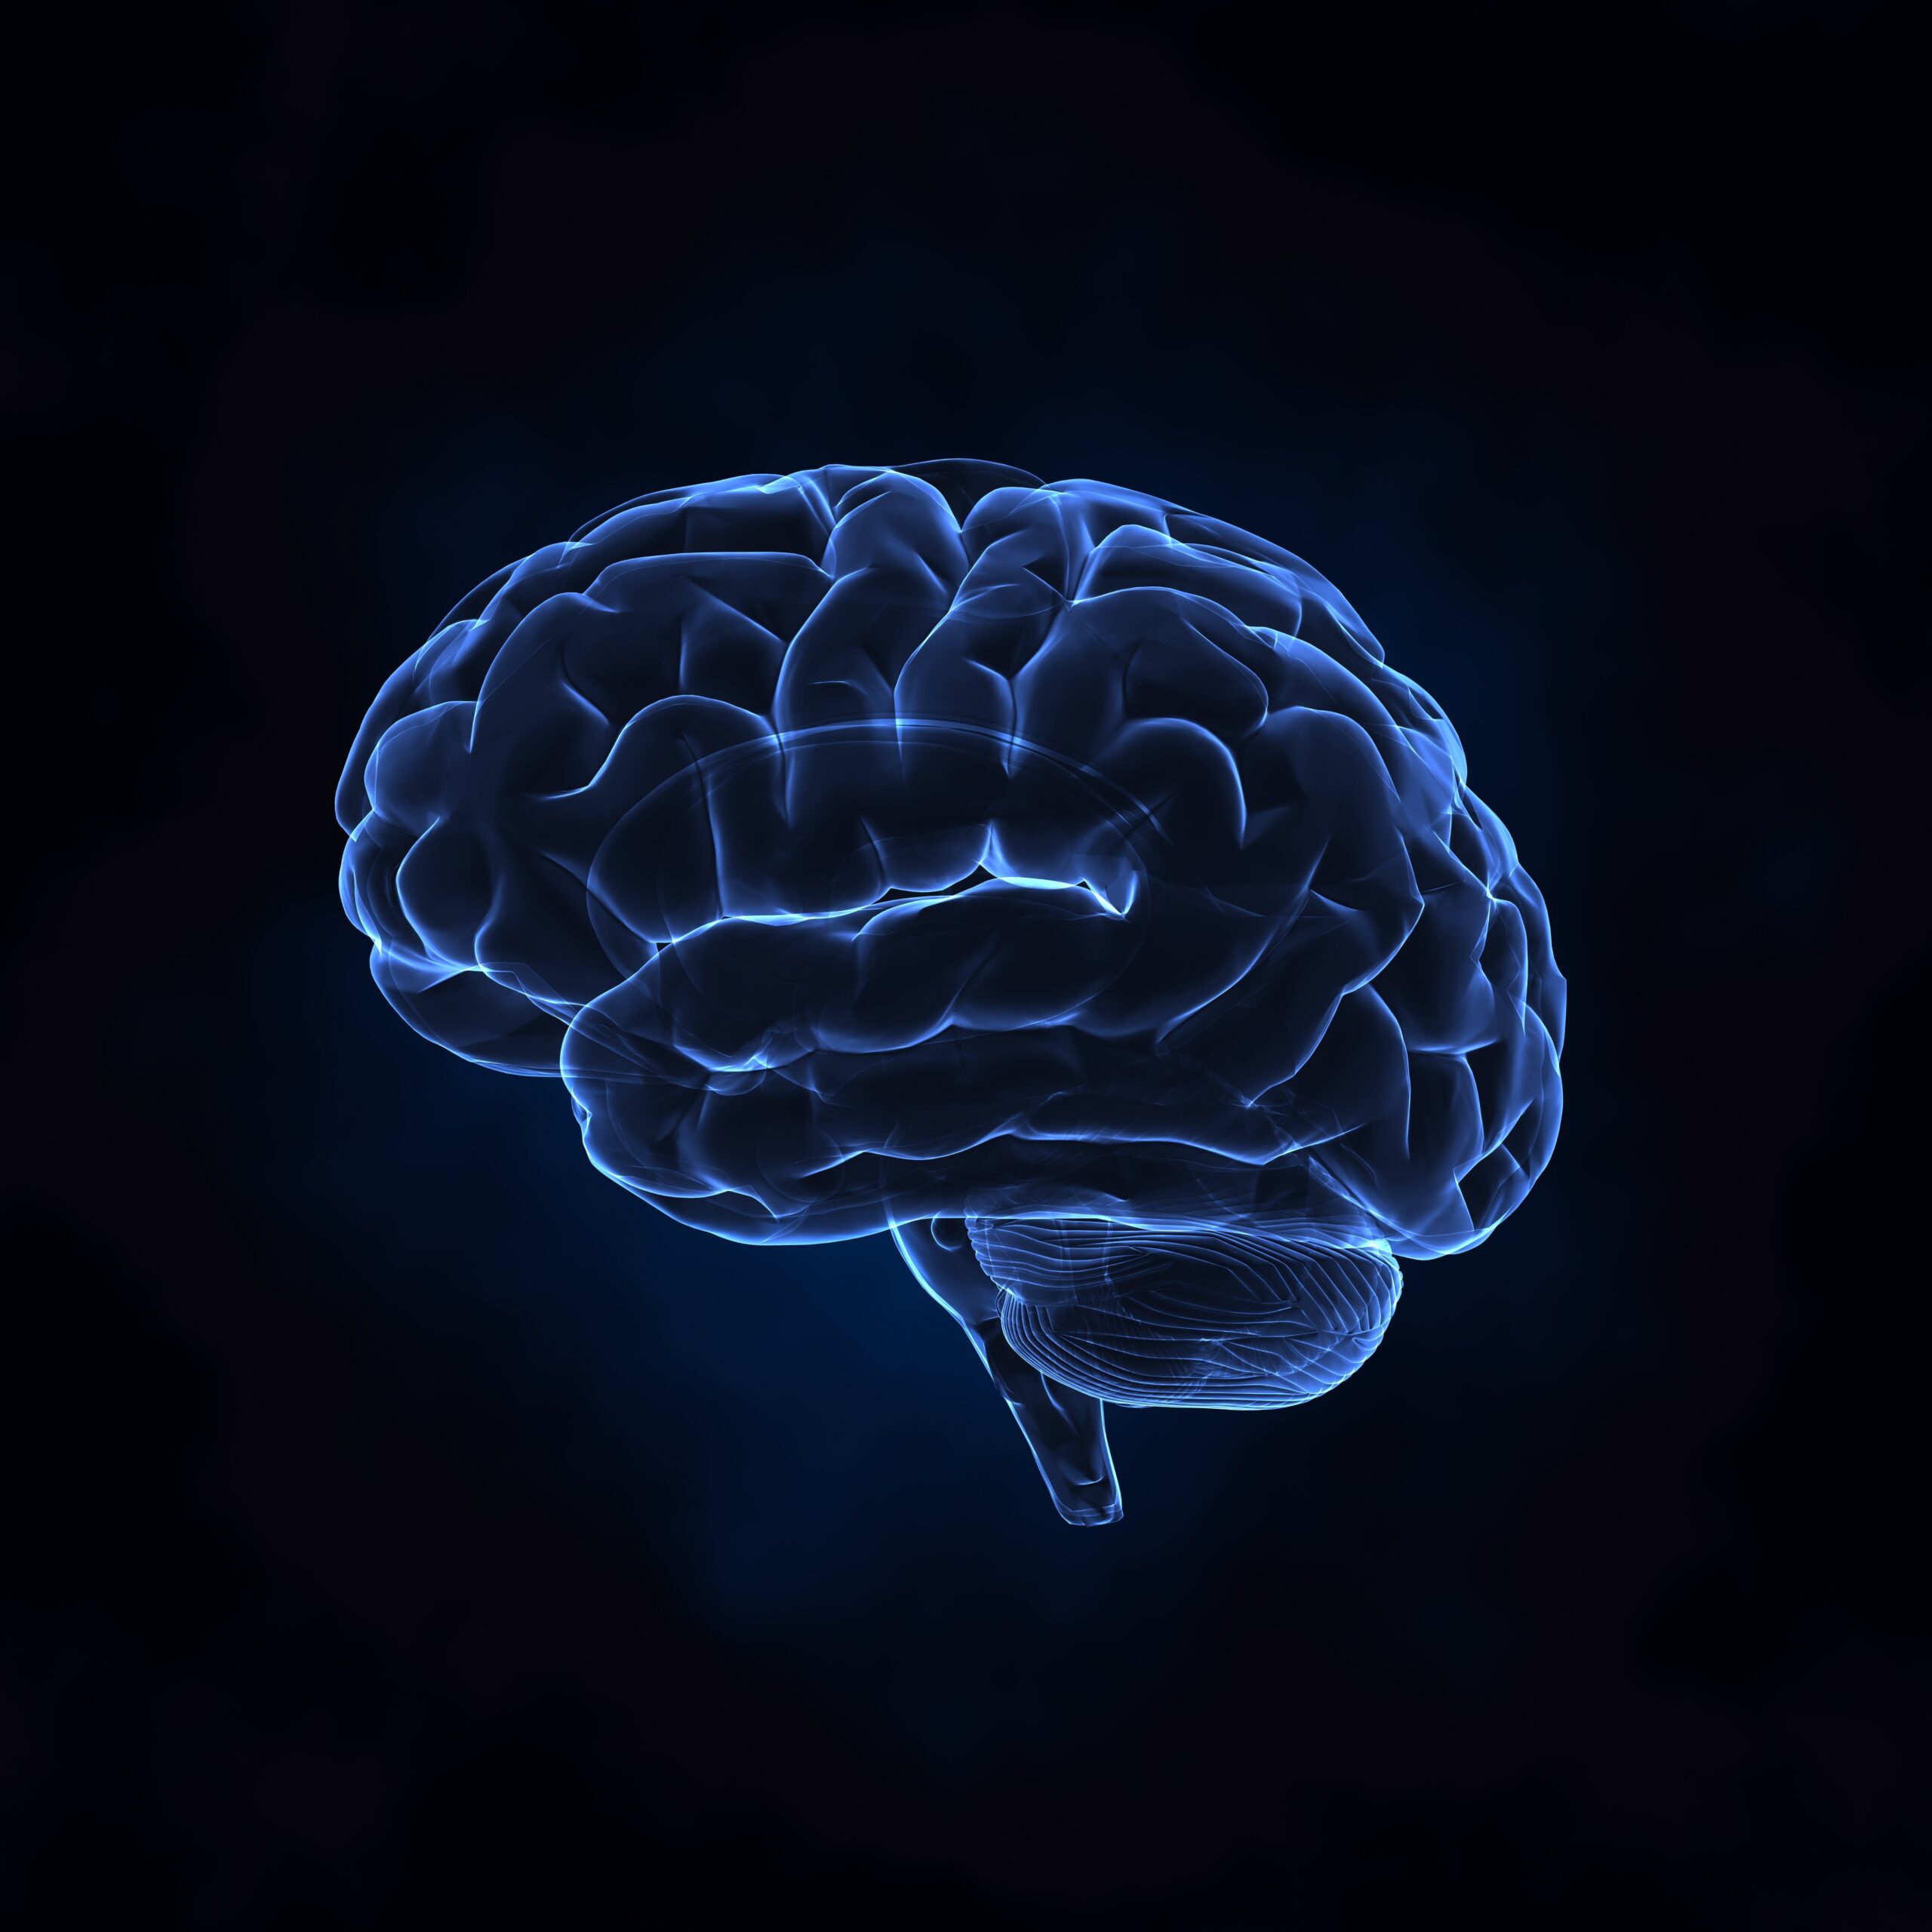 Human brain left x-ray view